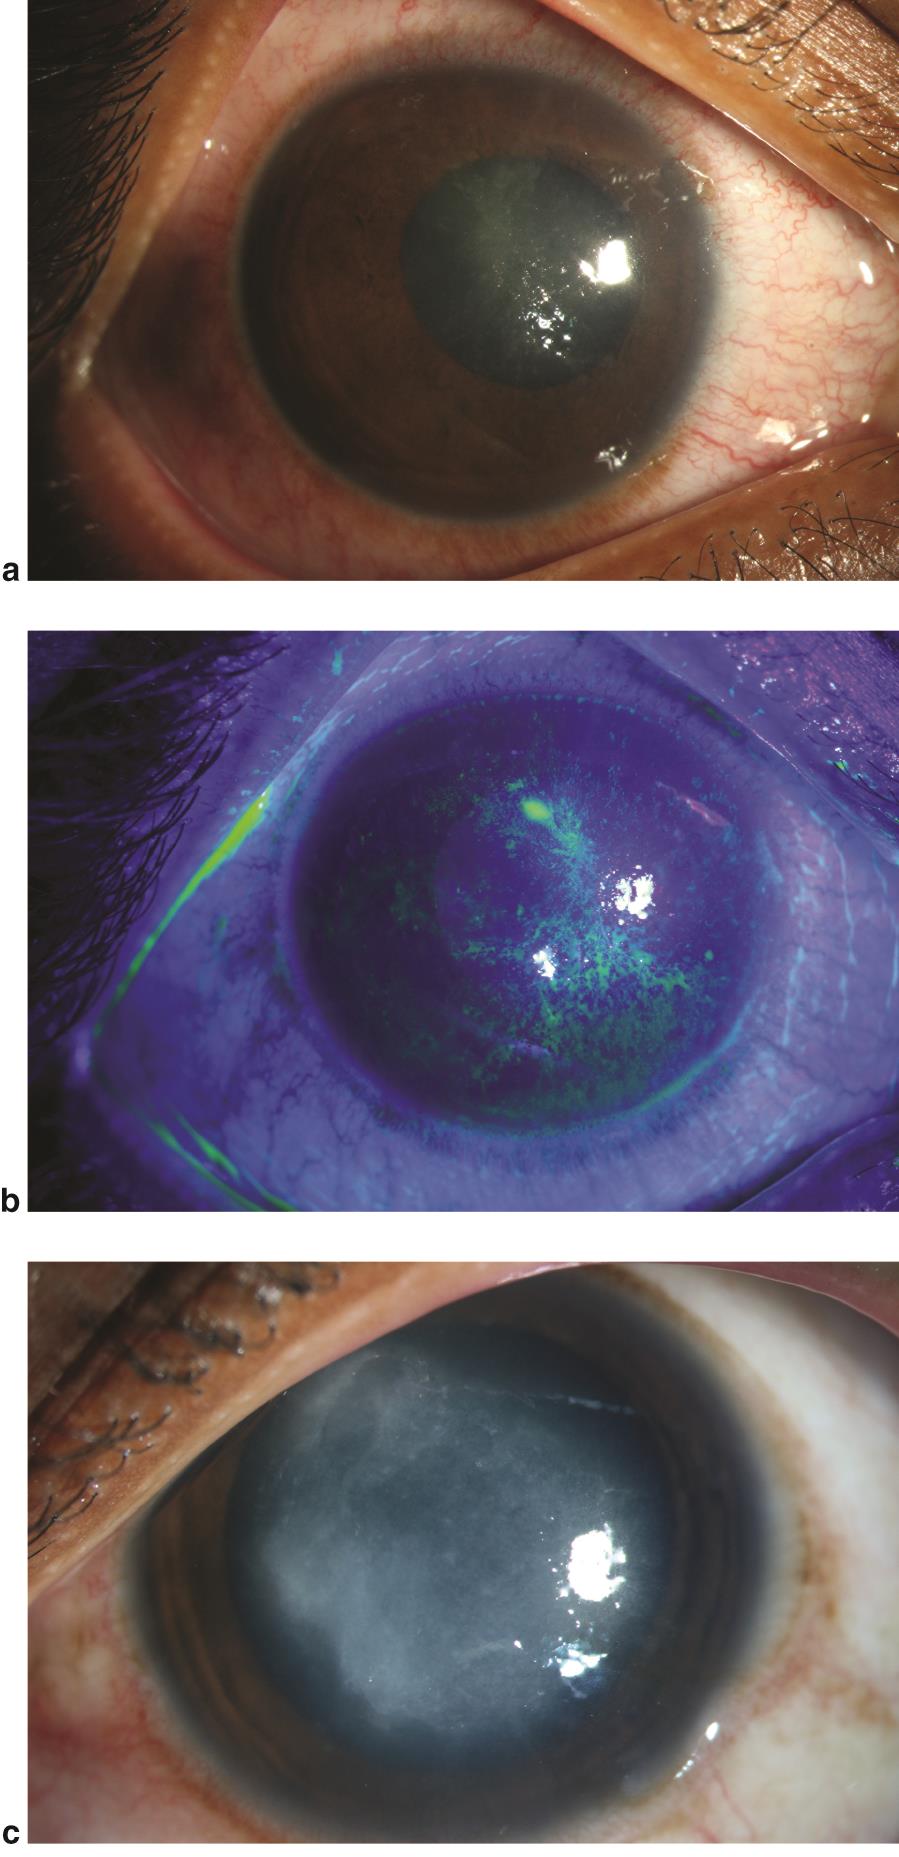 Early signs of Acanthamoeba keratitis - American Academy of Ophthalmology